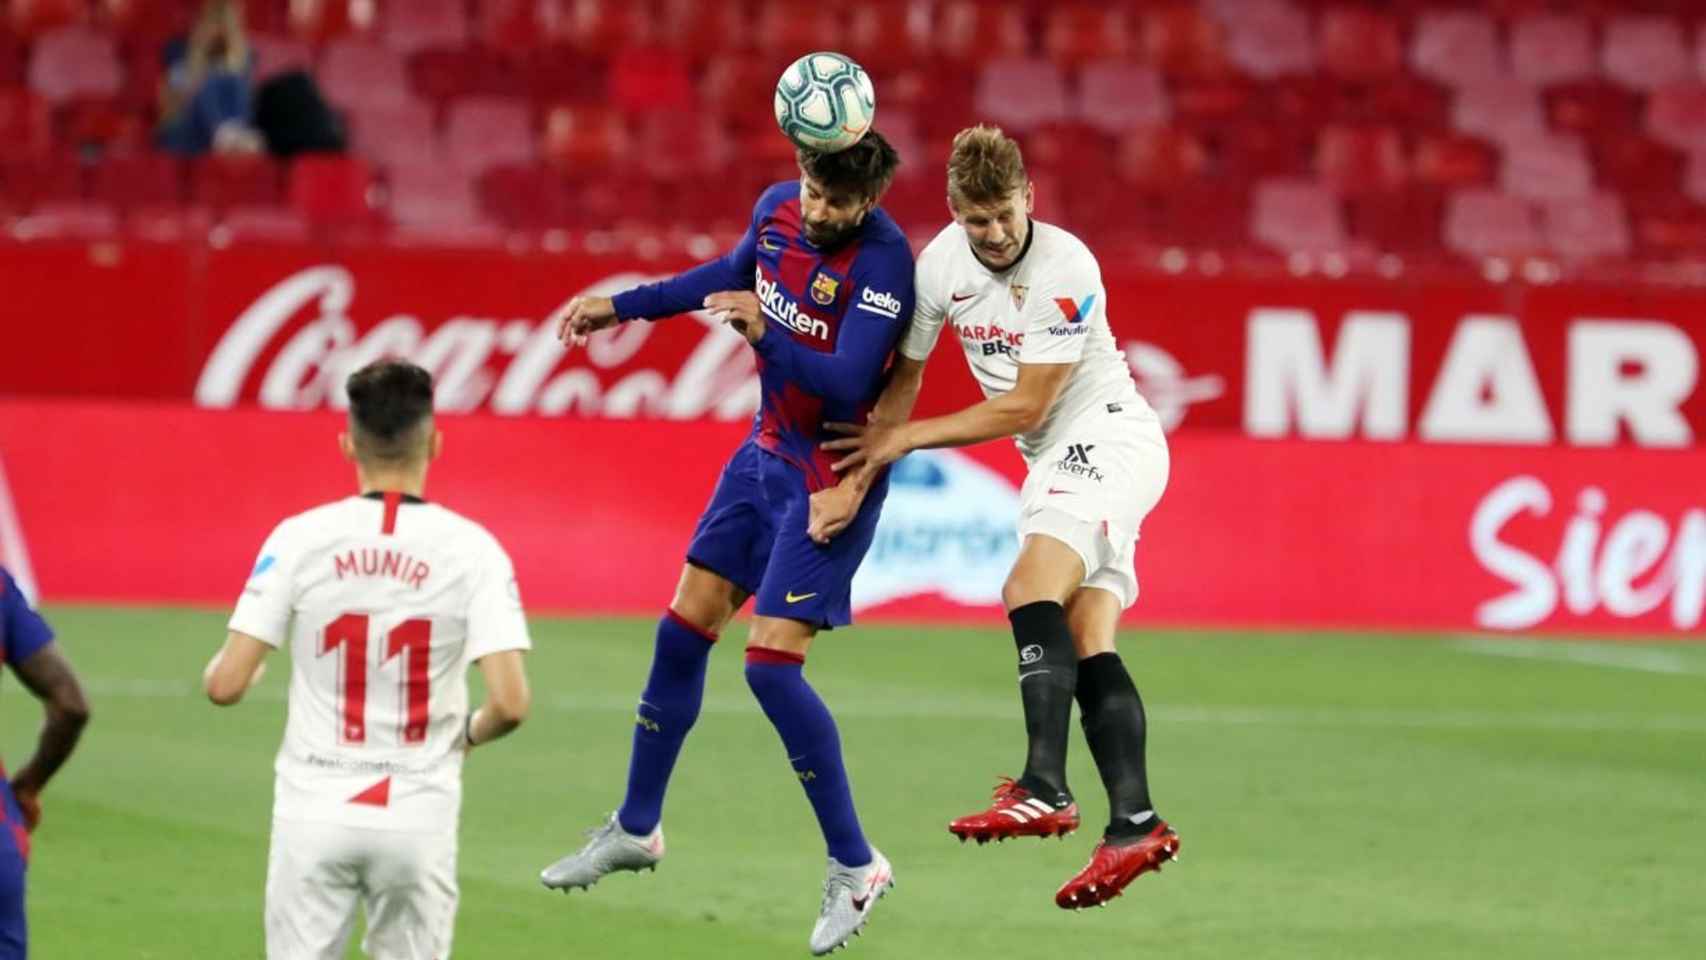 Gerard Piqué luchando con De Jong un balón aéreo en el Sevilla-Barça / FC Barcelona